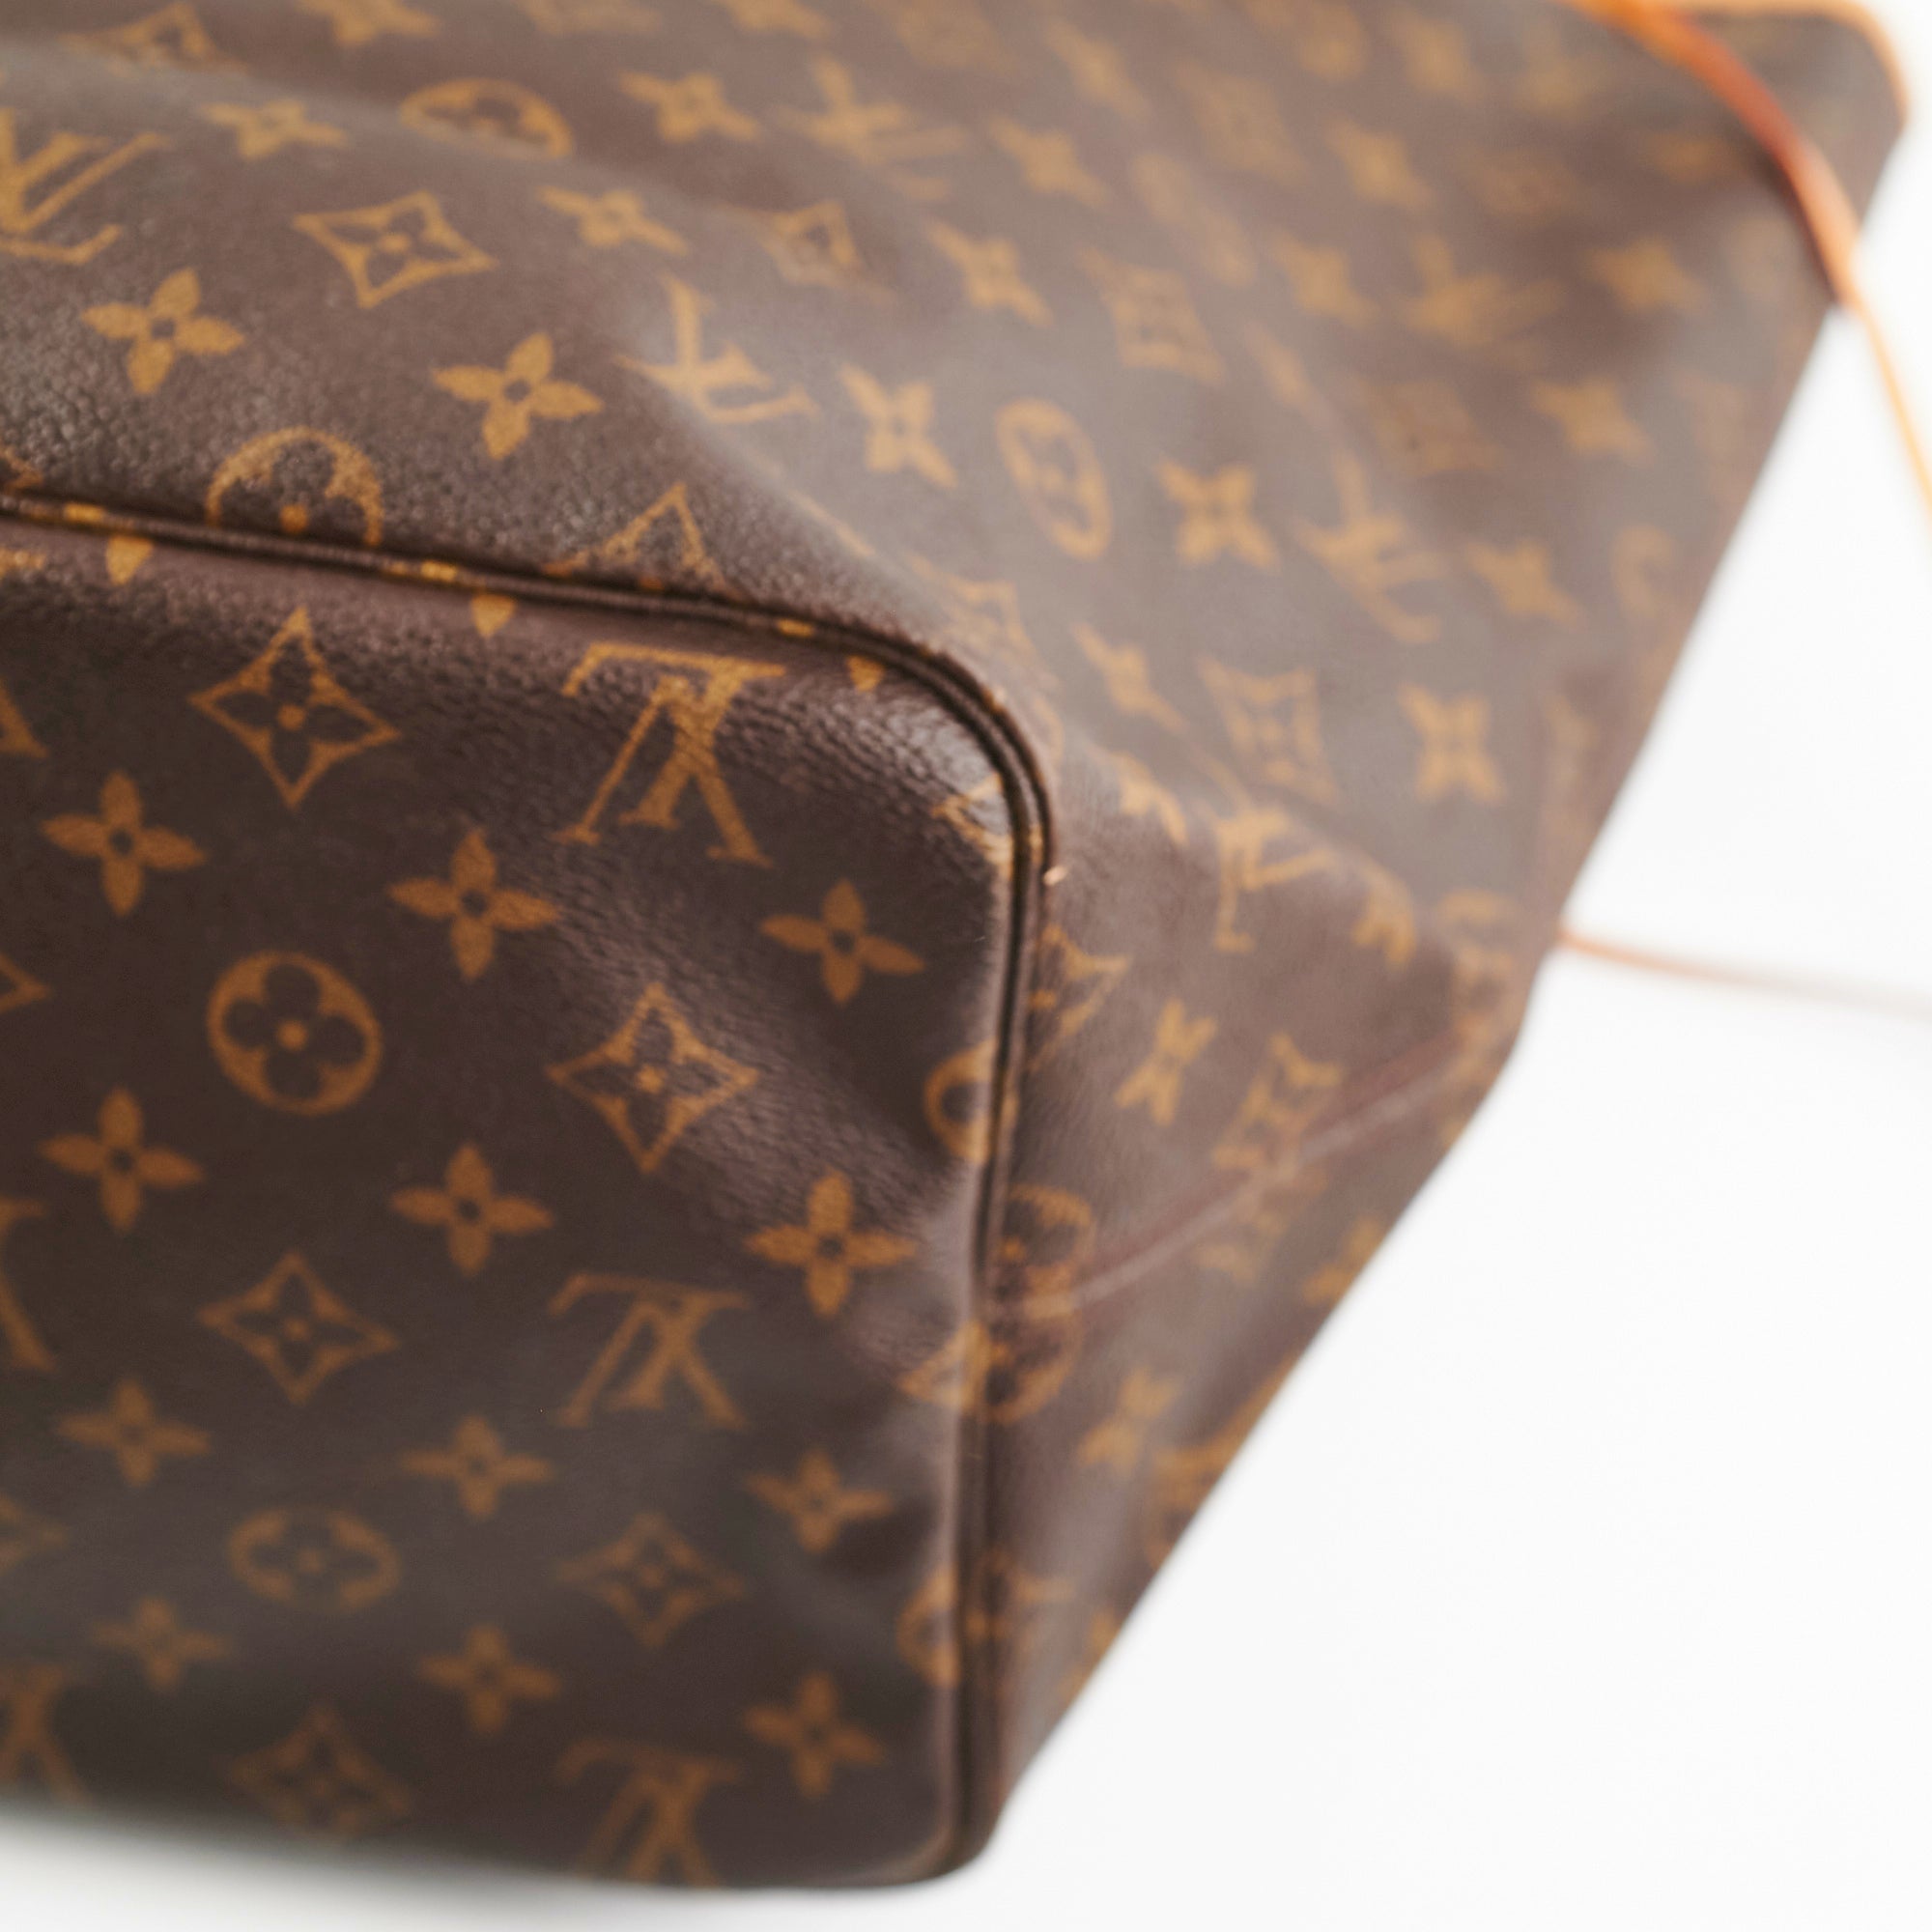 Louis Vuitton Neverfull MM: Handbag Review + WHY I Choose This Bag